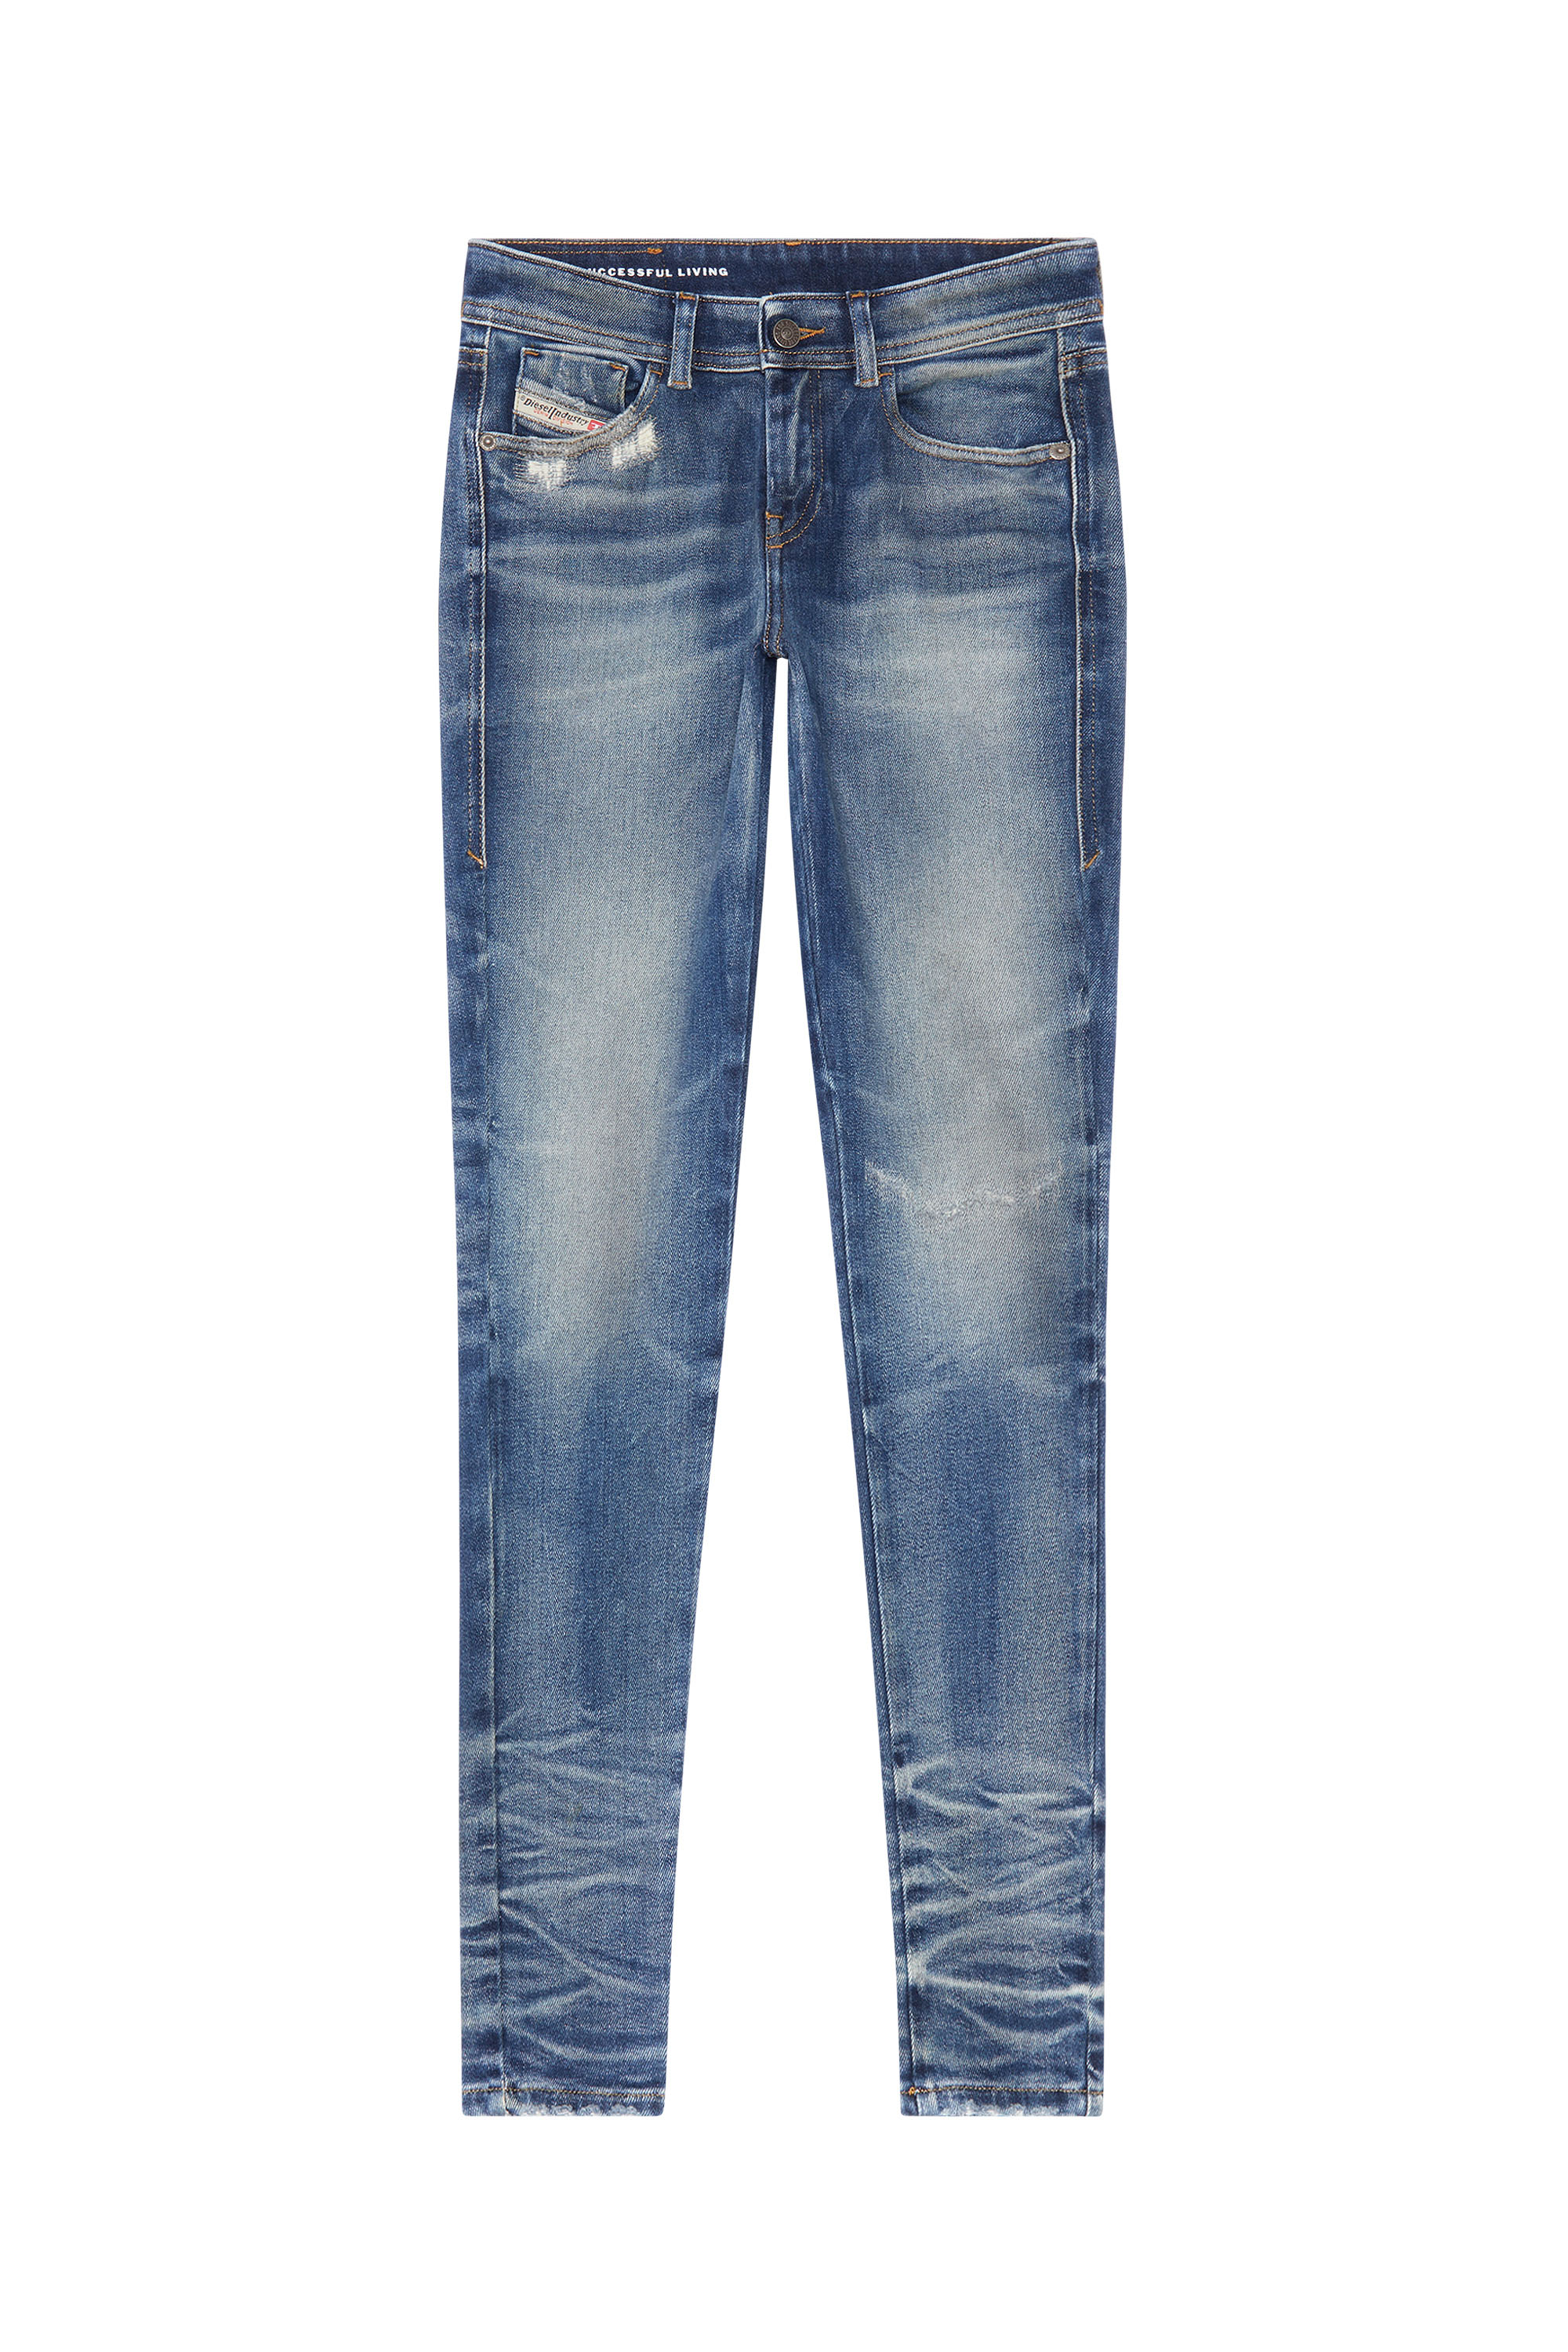 Diesel - Super skinny Jeans 2017 Slandy 09G14, Medium bl